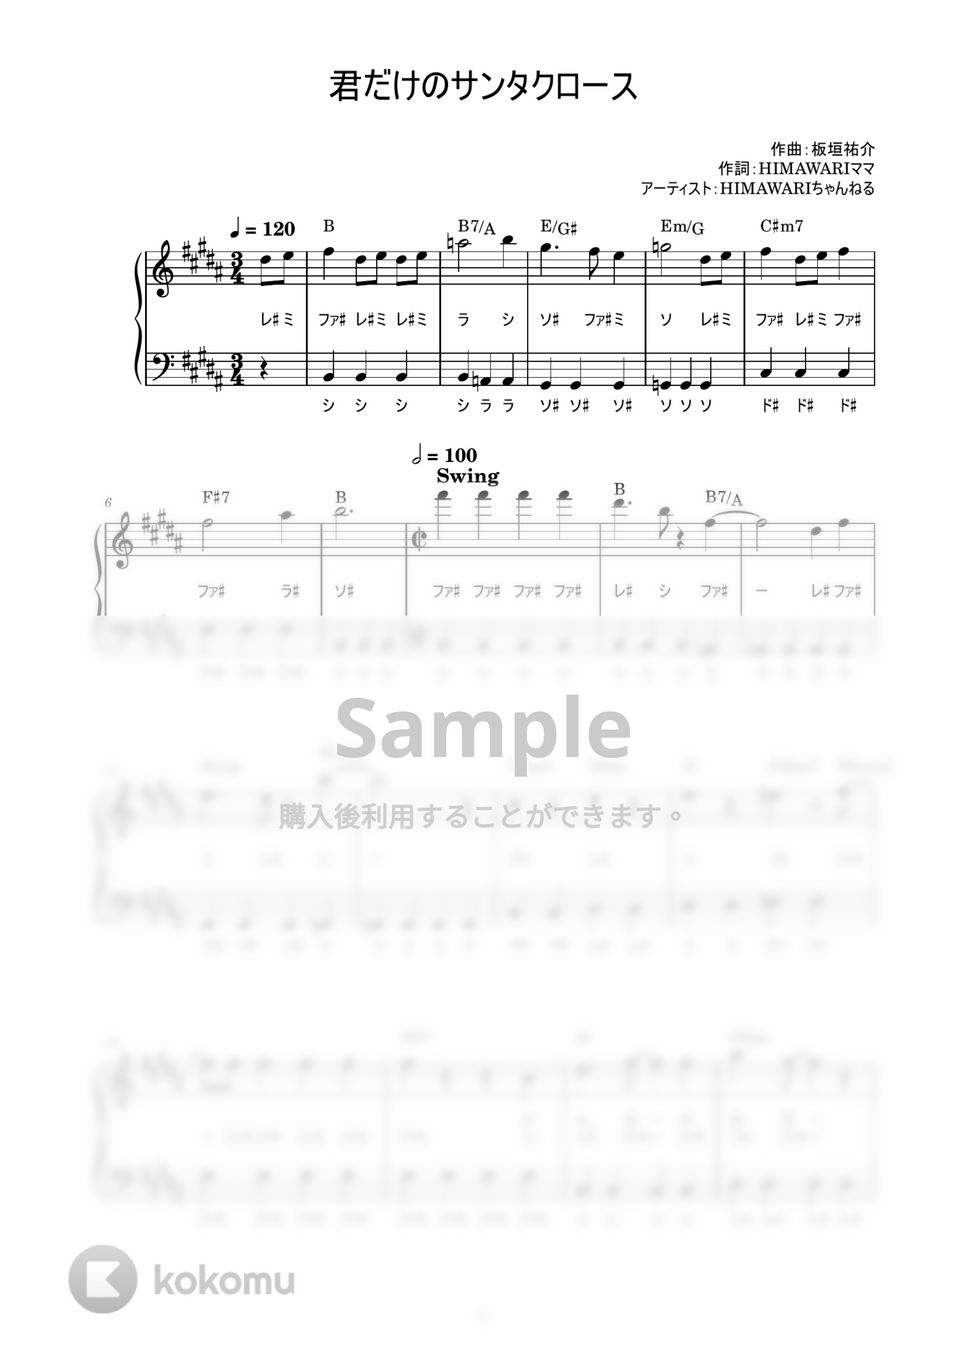 HIMAWARIママ - 君だけのサンタクロース (かんたん / 歌詞付き / ドレミ付き / 初心者) by piano.tokyo